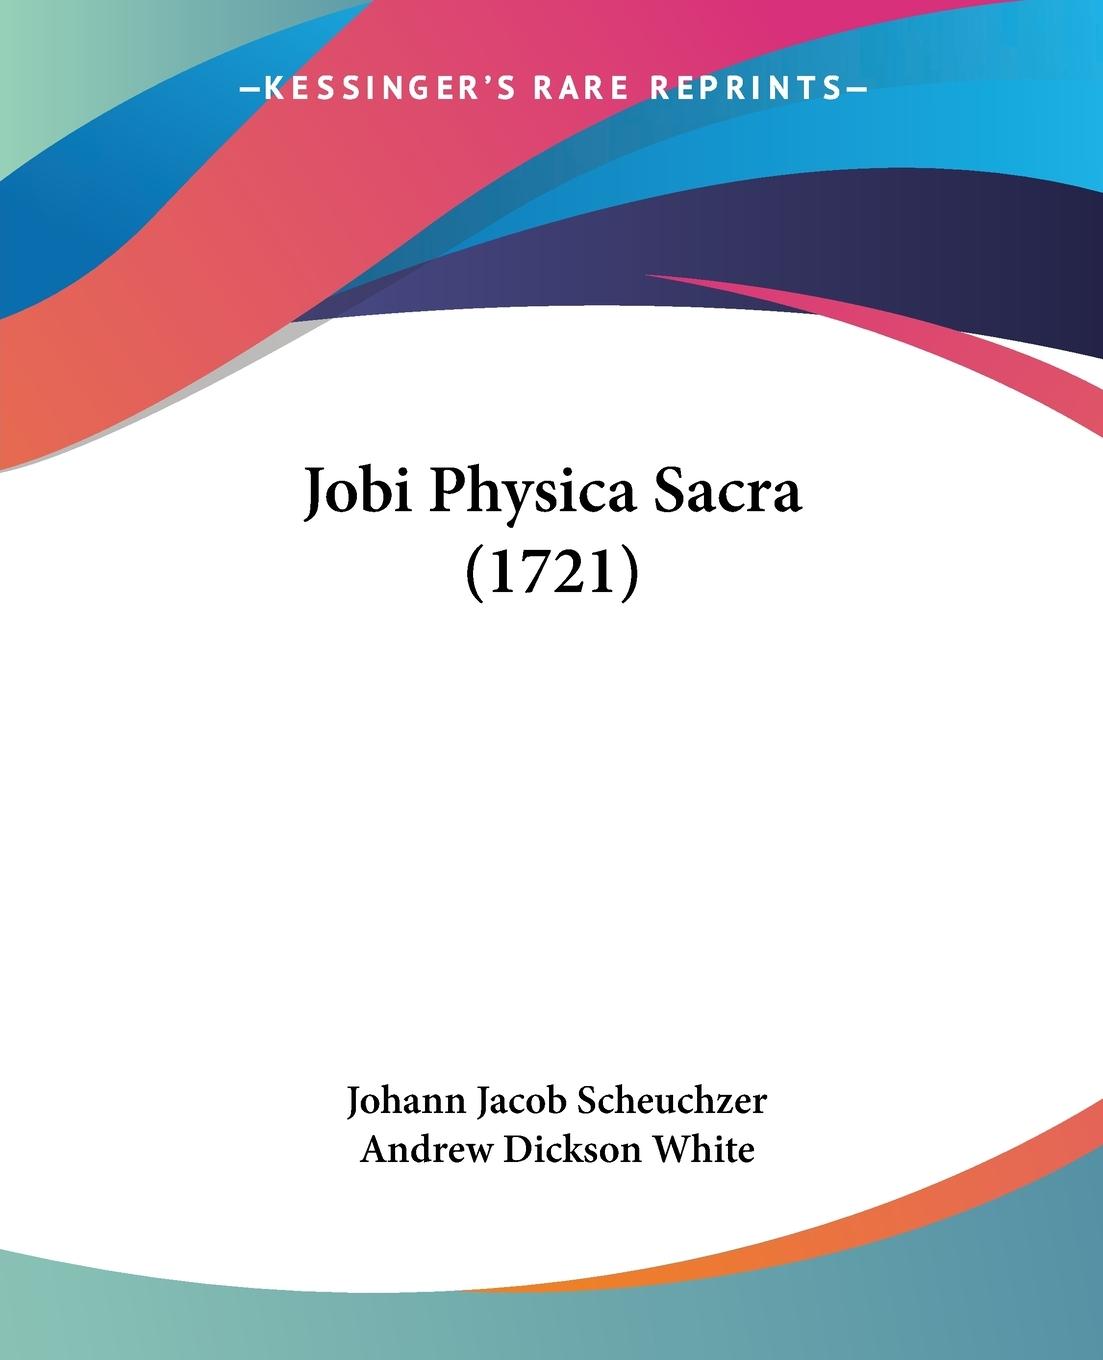 Jobi Physica Sacra (1721) / Johann Jacob Scheuchzer / Taschenbuch / Paperback / Deutsch / 2009 / Kessinger Publishing, LLC / EAN 9781104774325 - Scheuchzer, Johann Jacob